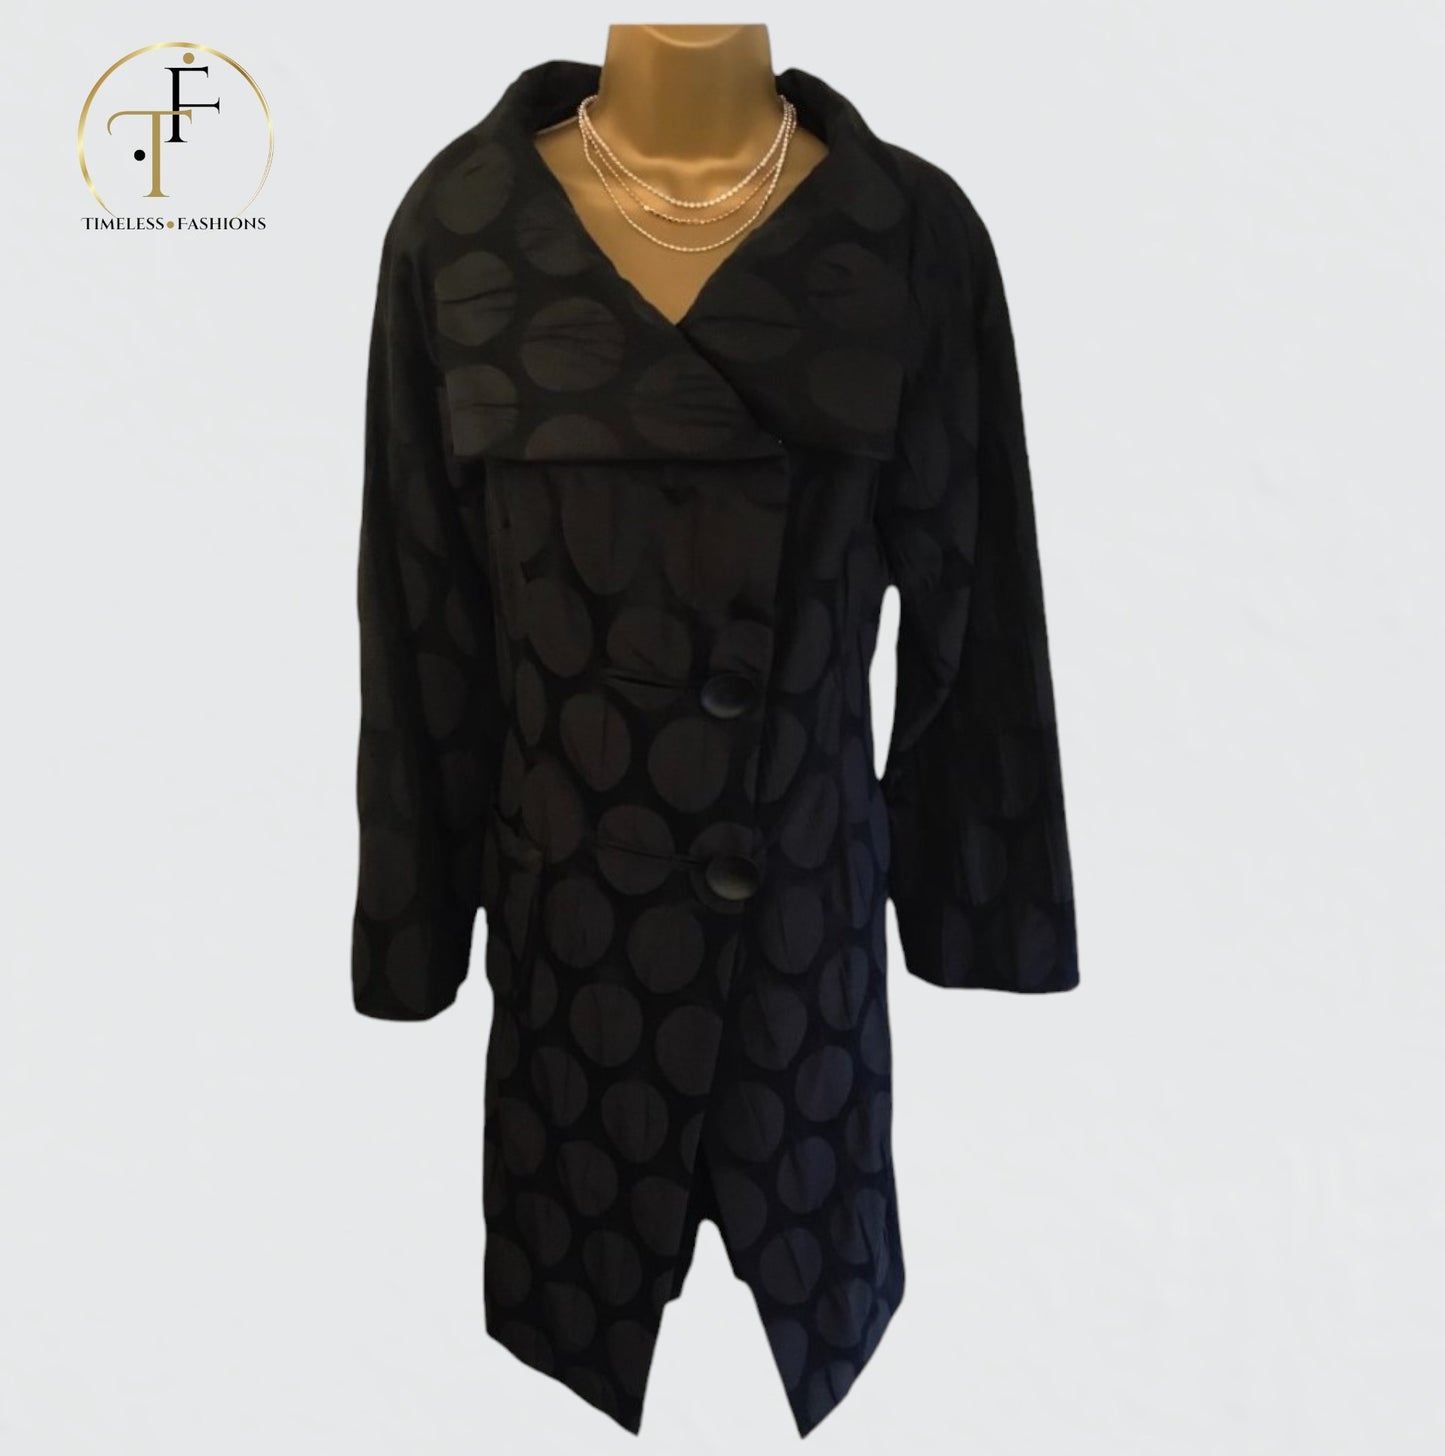 SULU Kirstin Bernecker Black Lagenlook Coat UK 10 US 6 EU 38 Timeless Fashions